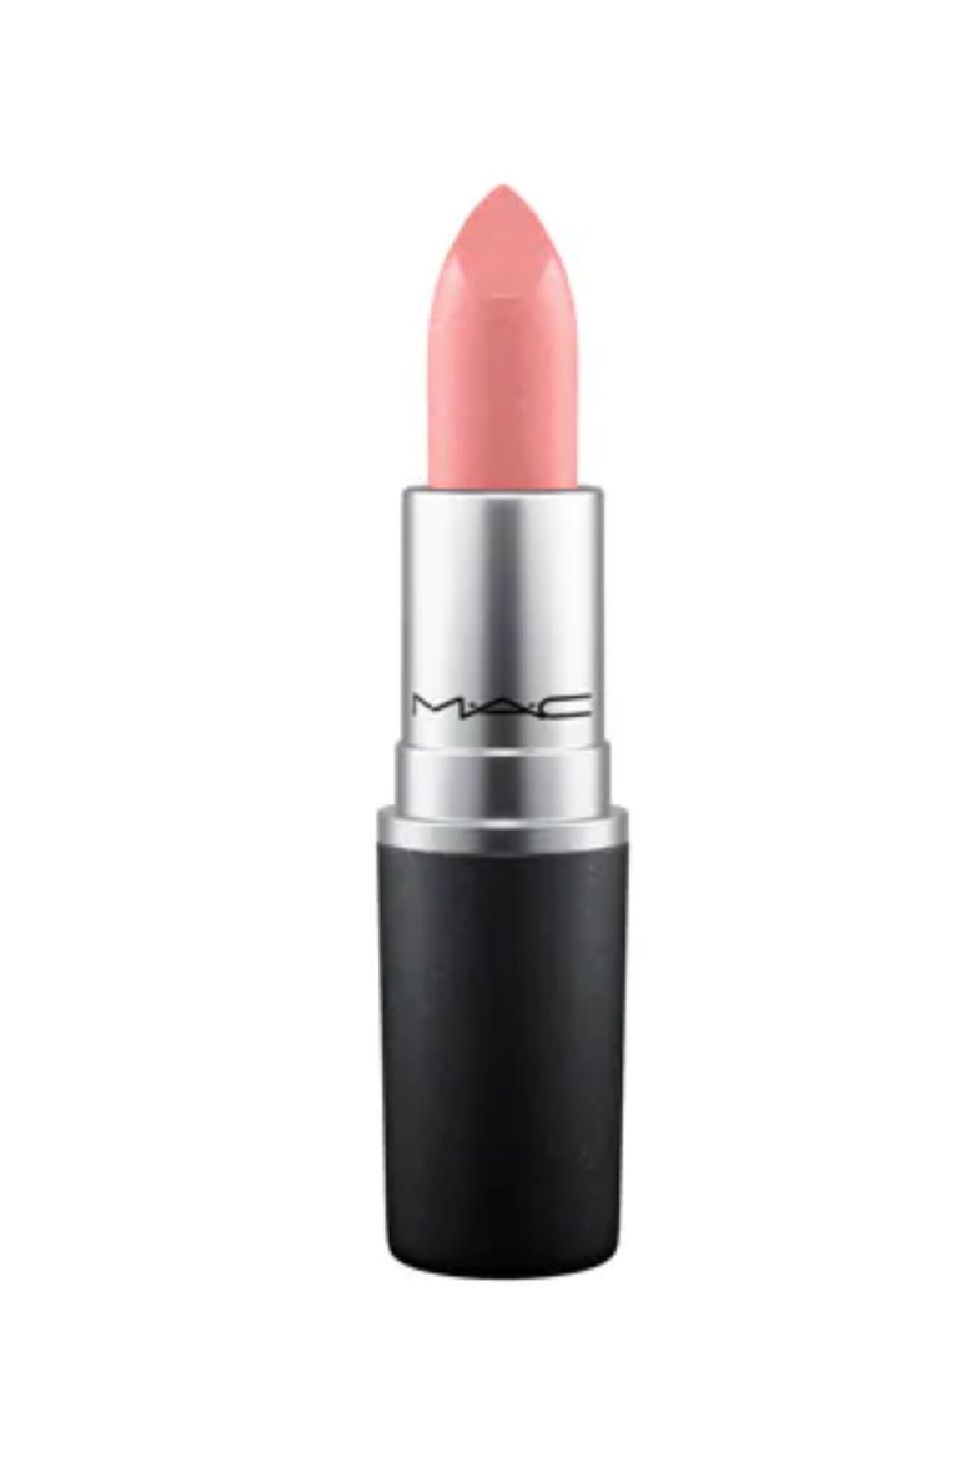 MAC Cosmetics Frost Lipstick in Pink Power